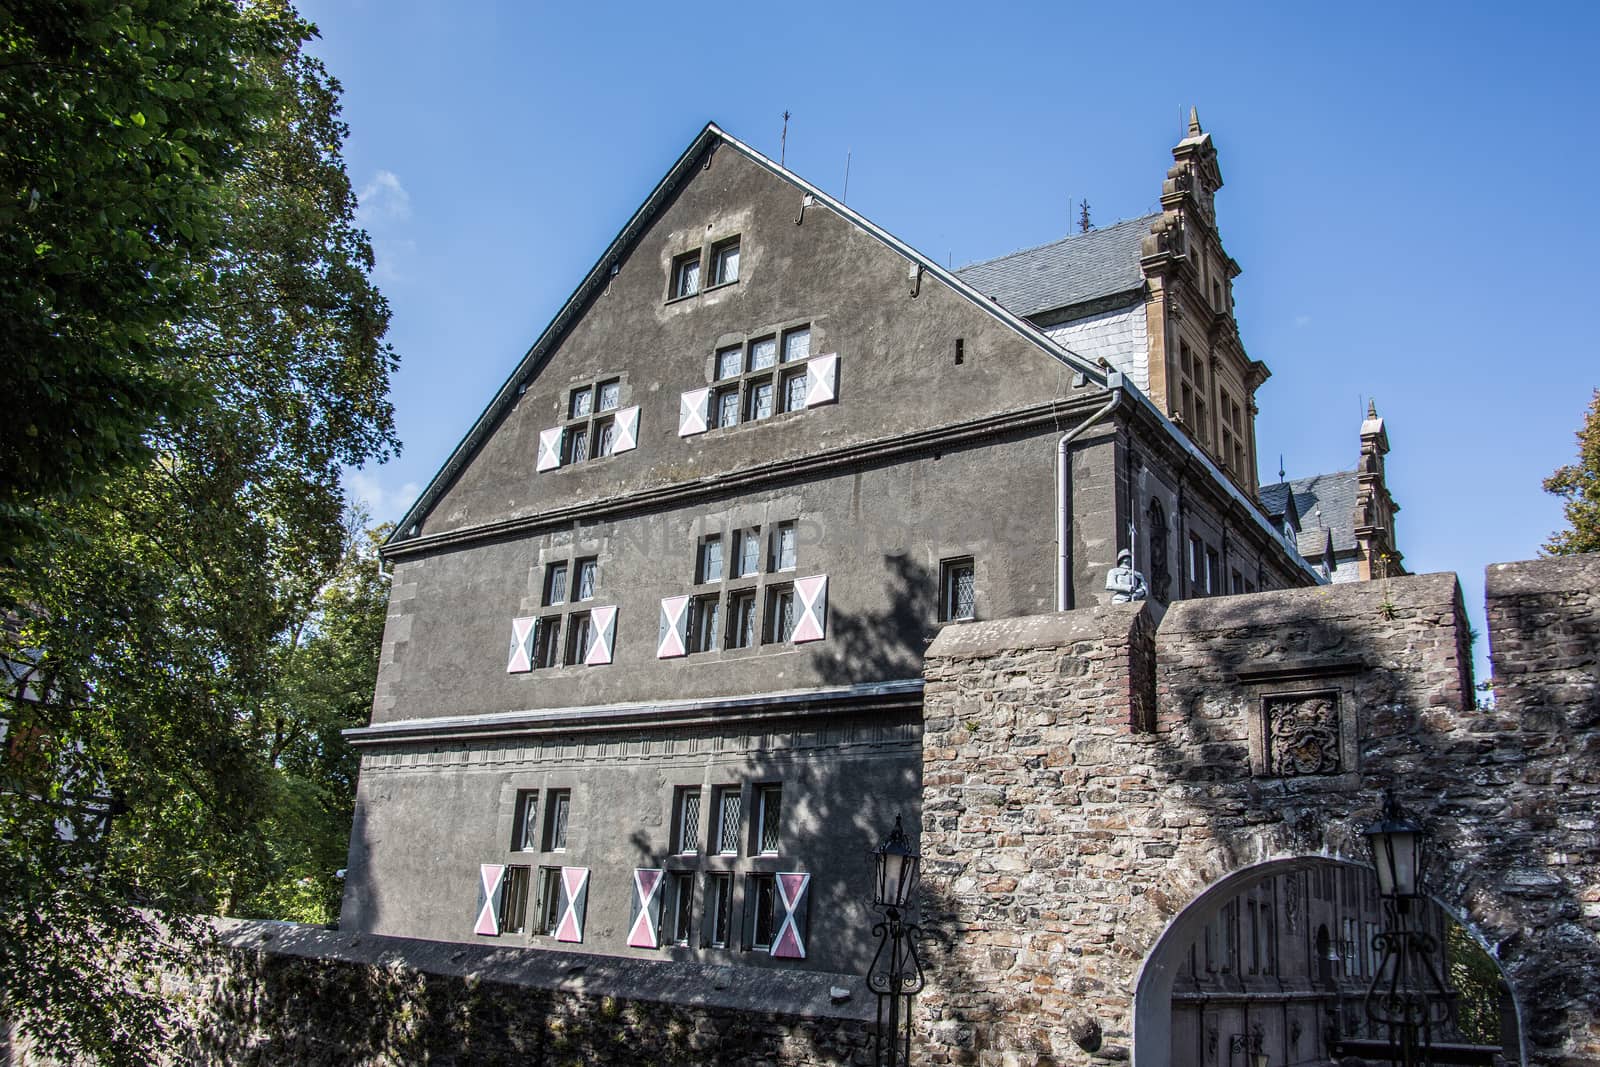 Friedewald castle hotel in the Westerwald by Dr-Lange